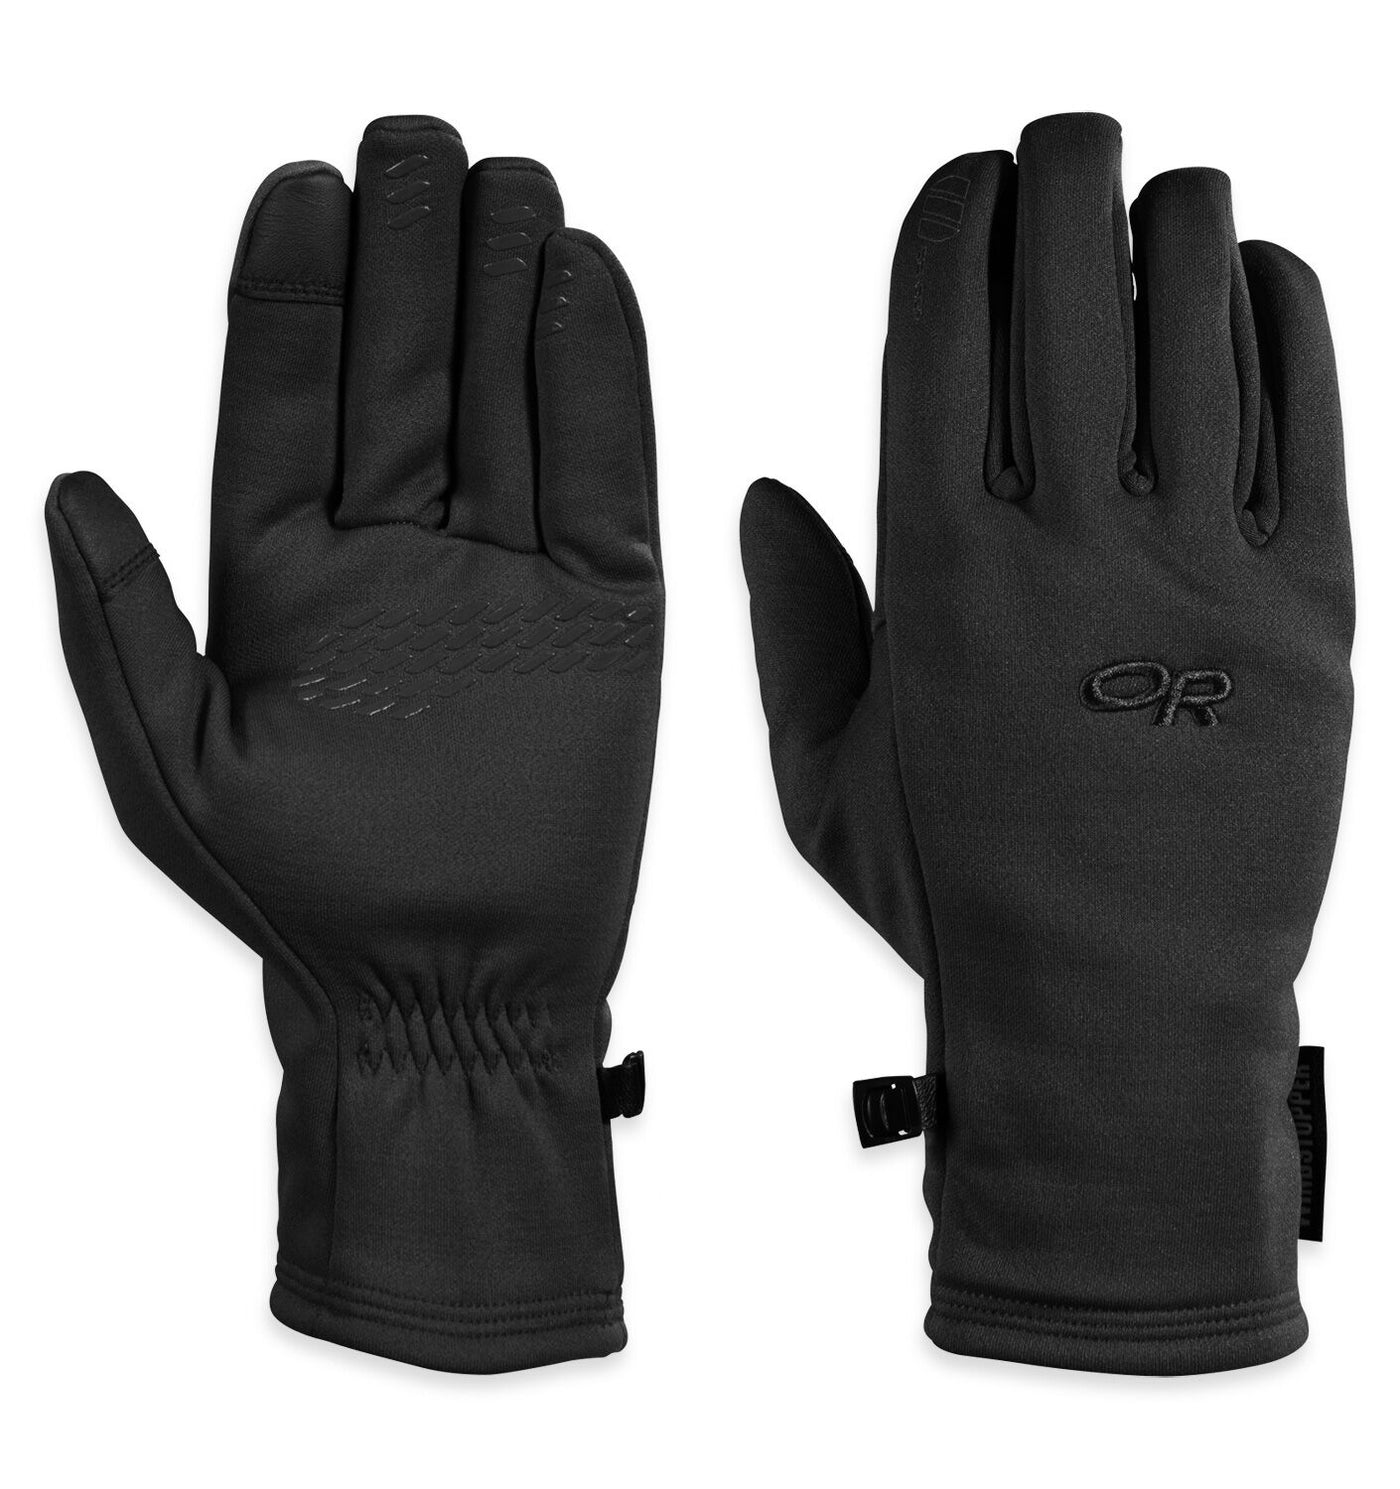 Backstop Sensor Gloves Men's